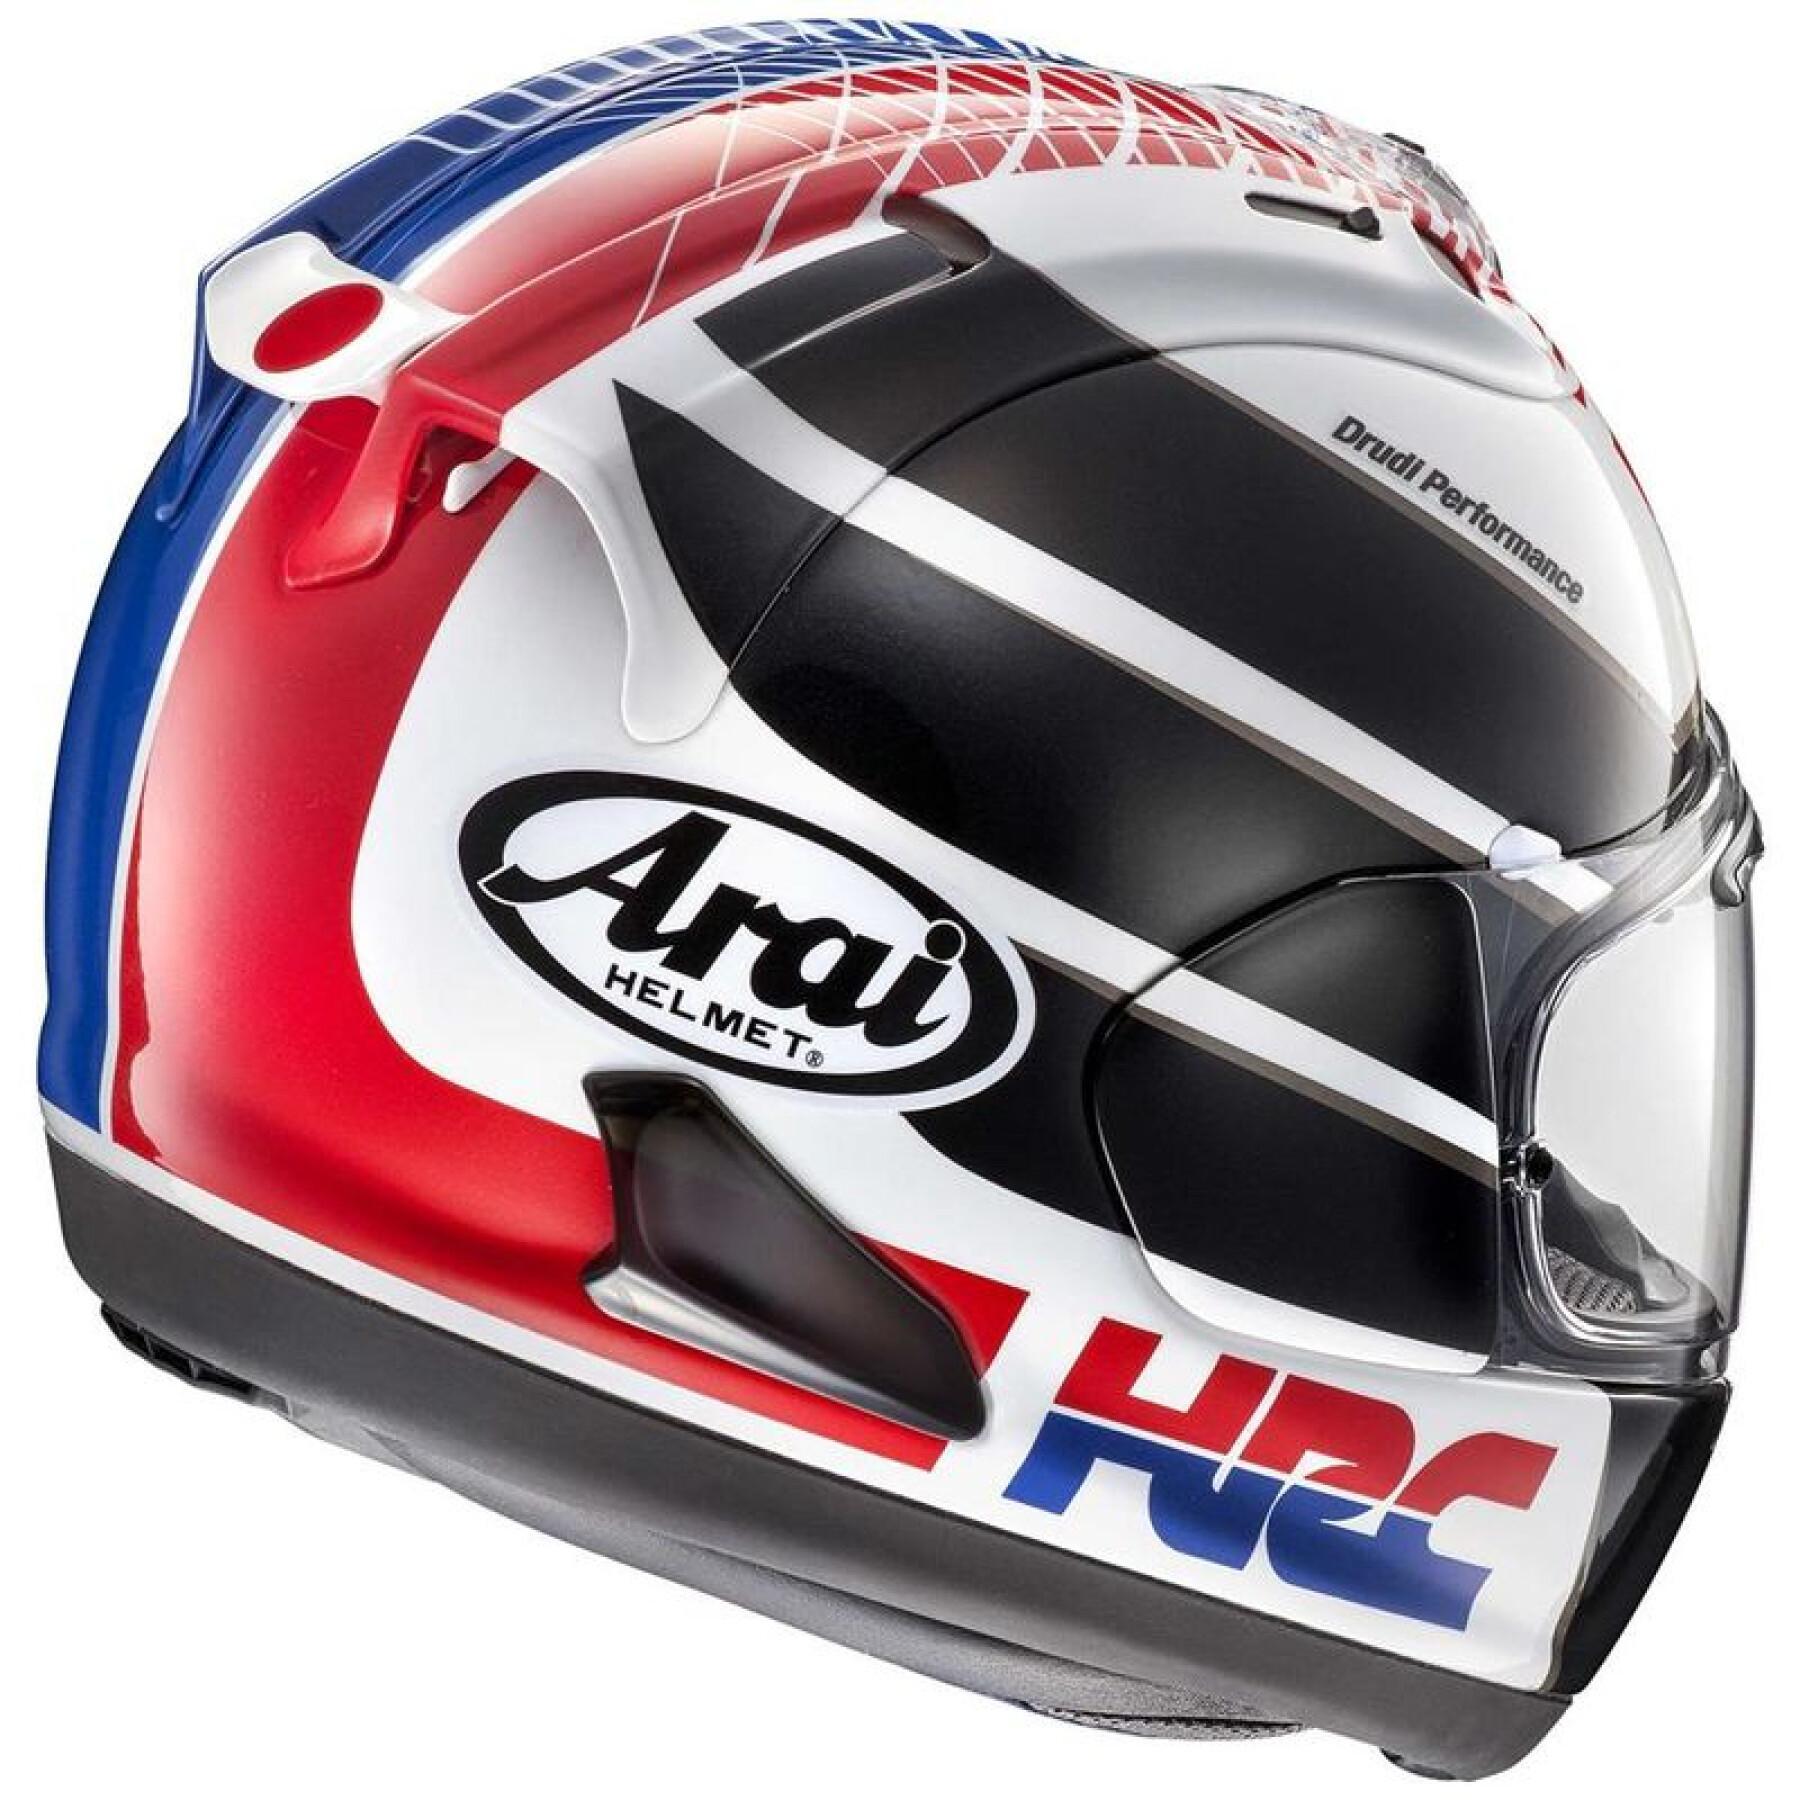 Limited edition helmet Arai RX-7V HRC